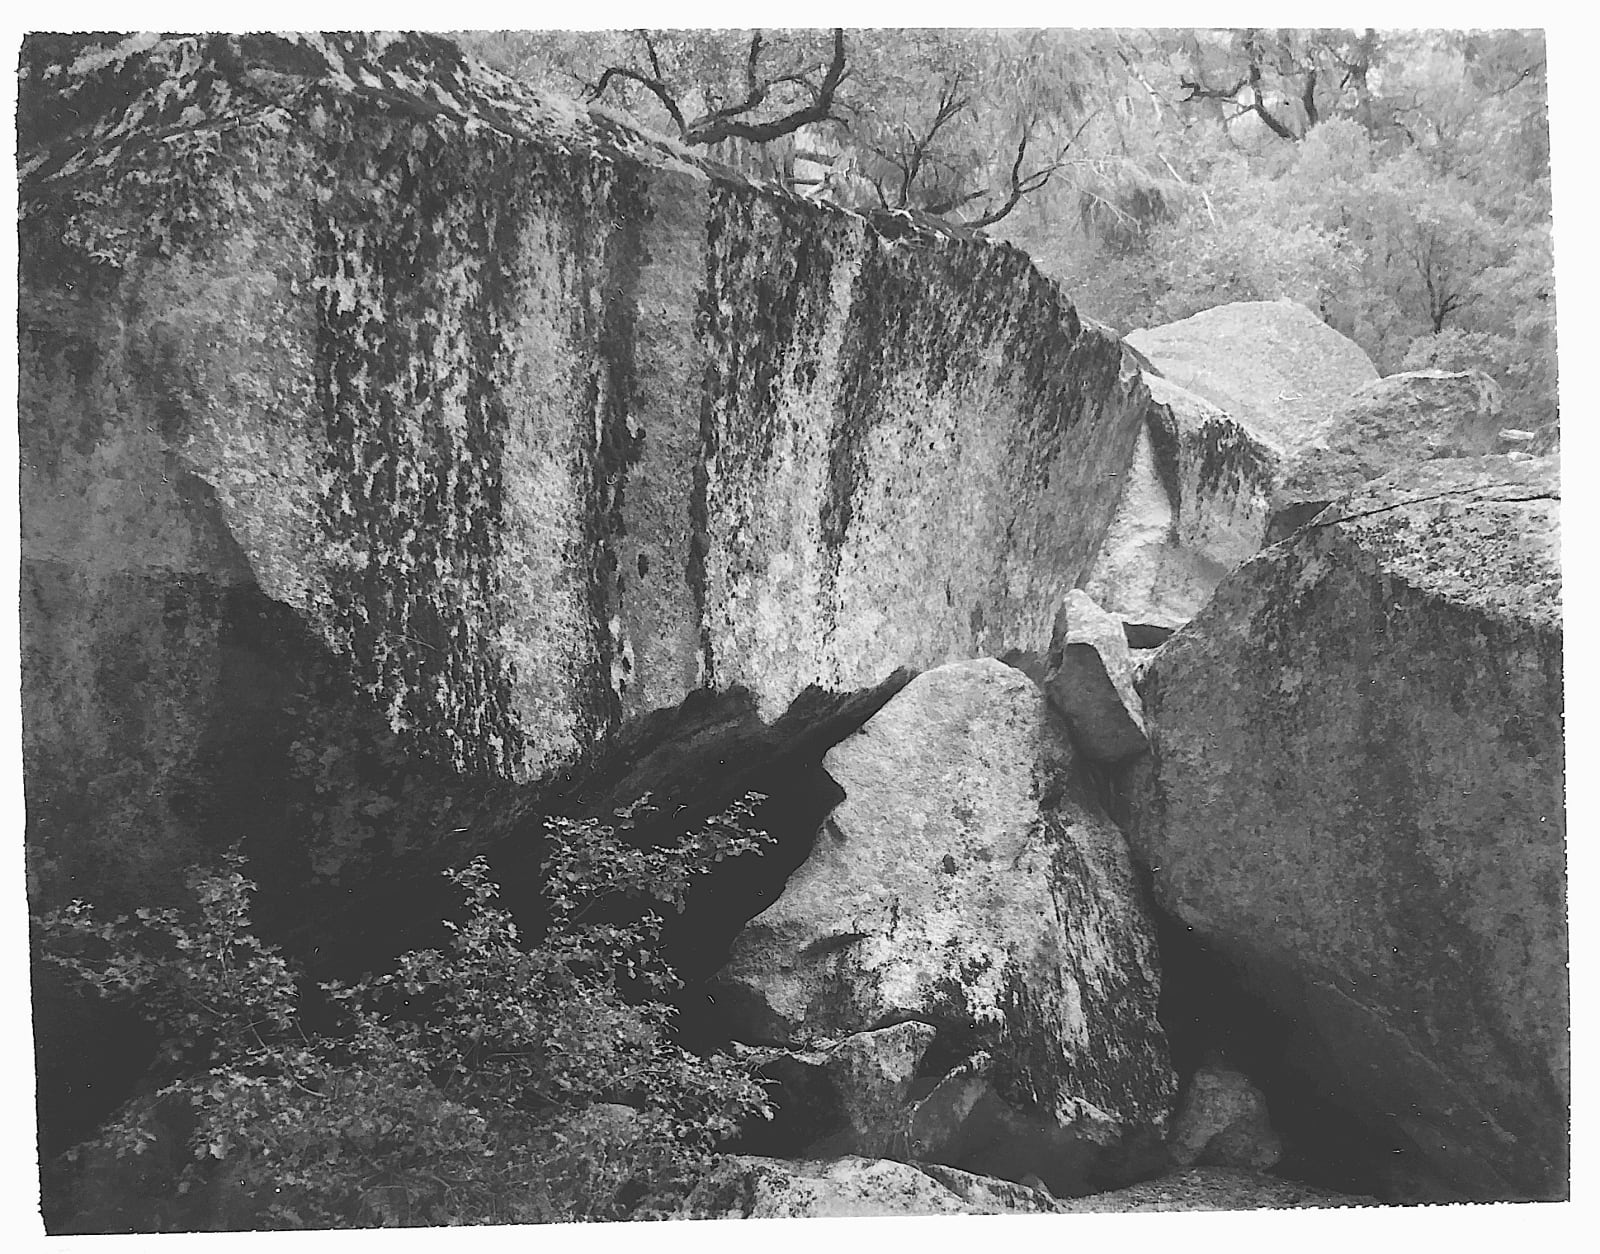 Ansel Adams, Fallen Rock, Yosemite, c. 1962